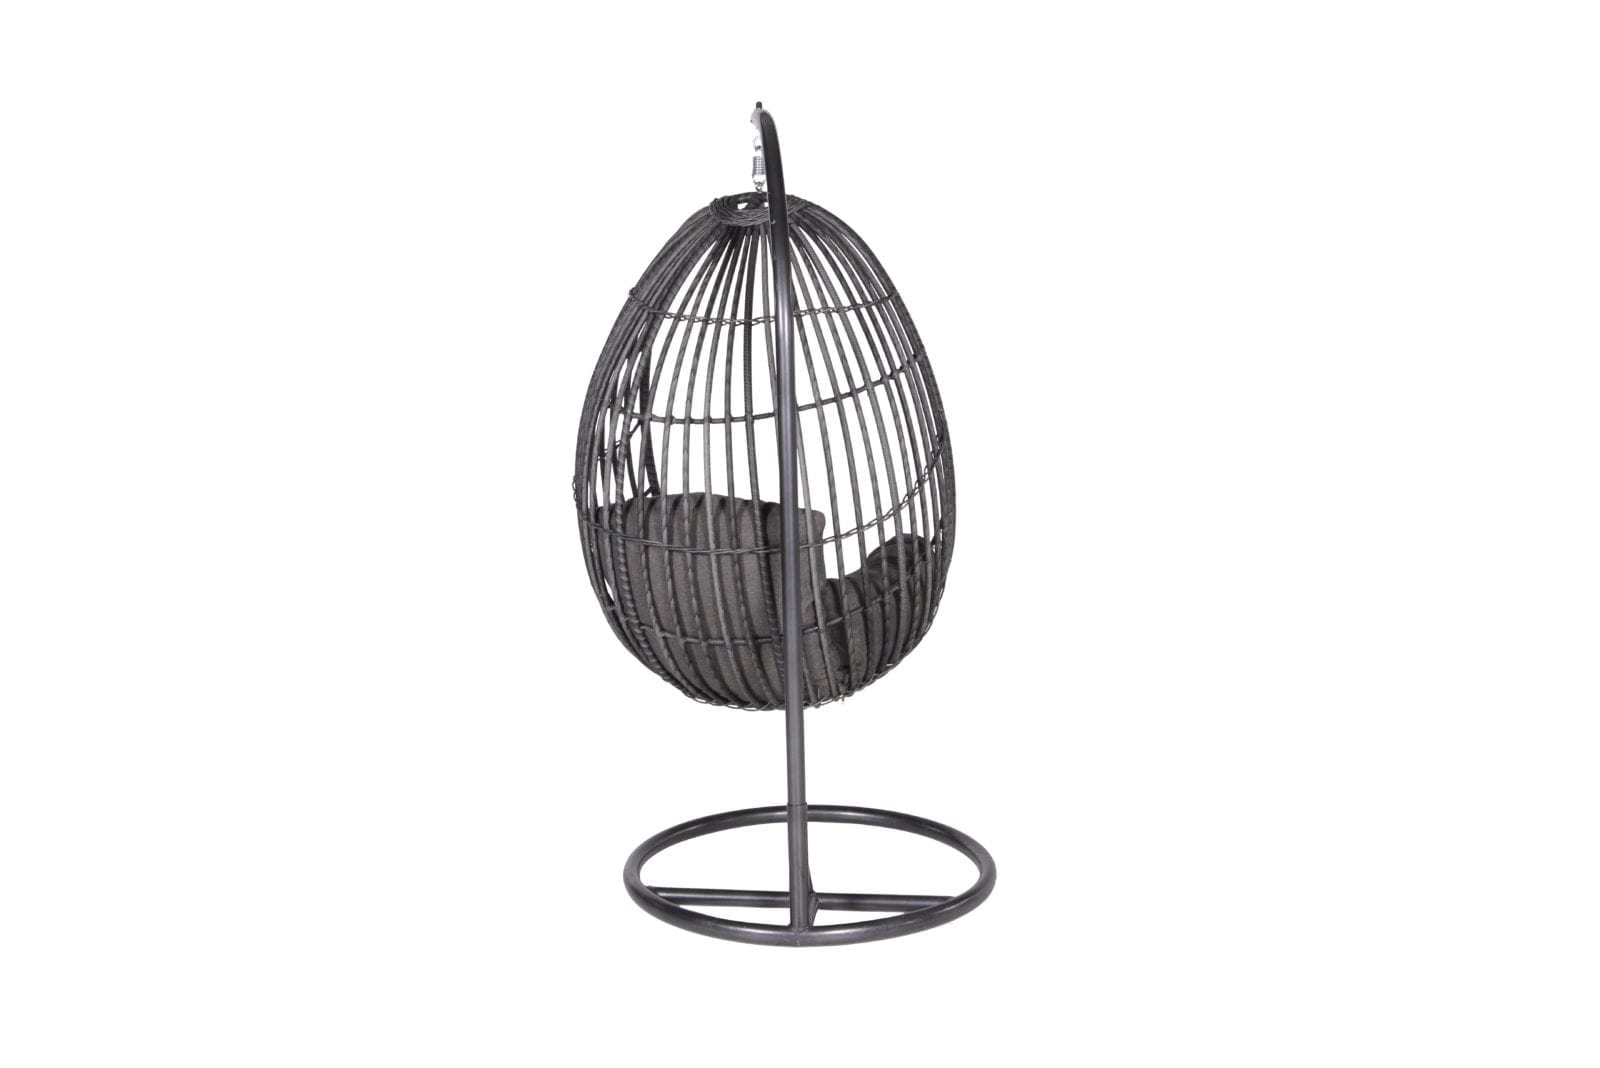 Hangstoel Panama swing chair egg carbon bl./earl grey/dark grey 10970GS achterkant 5MB 1 scaled